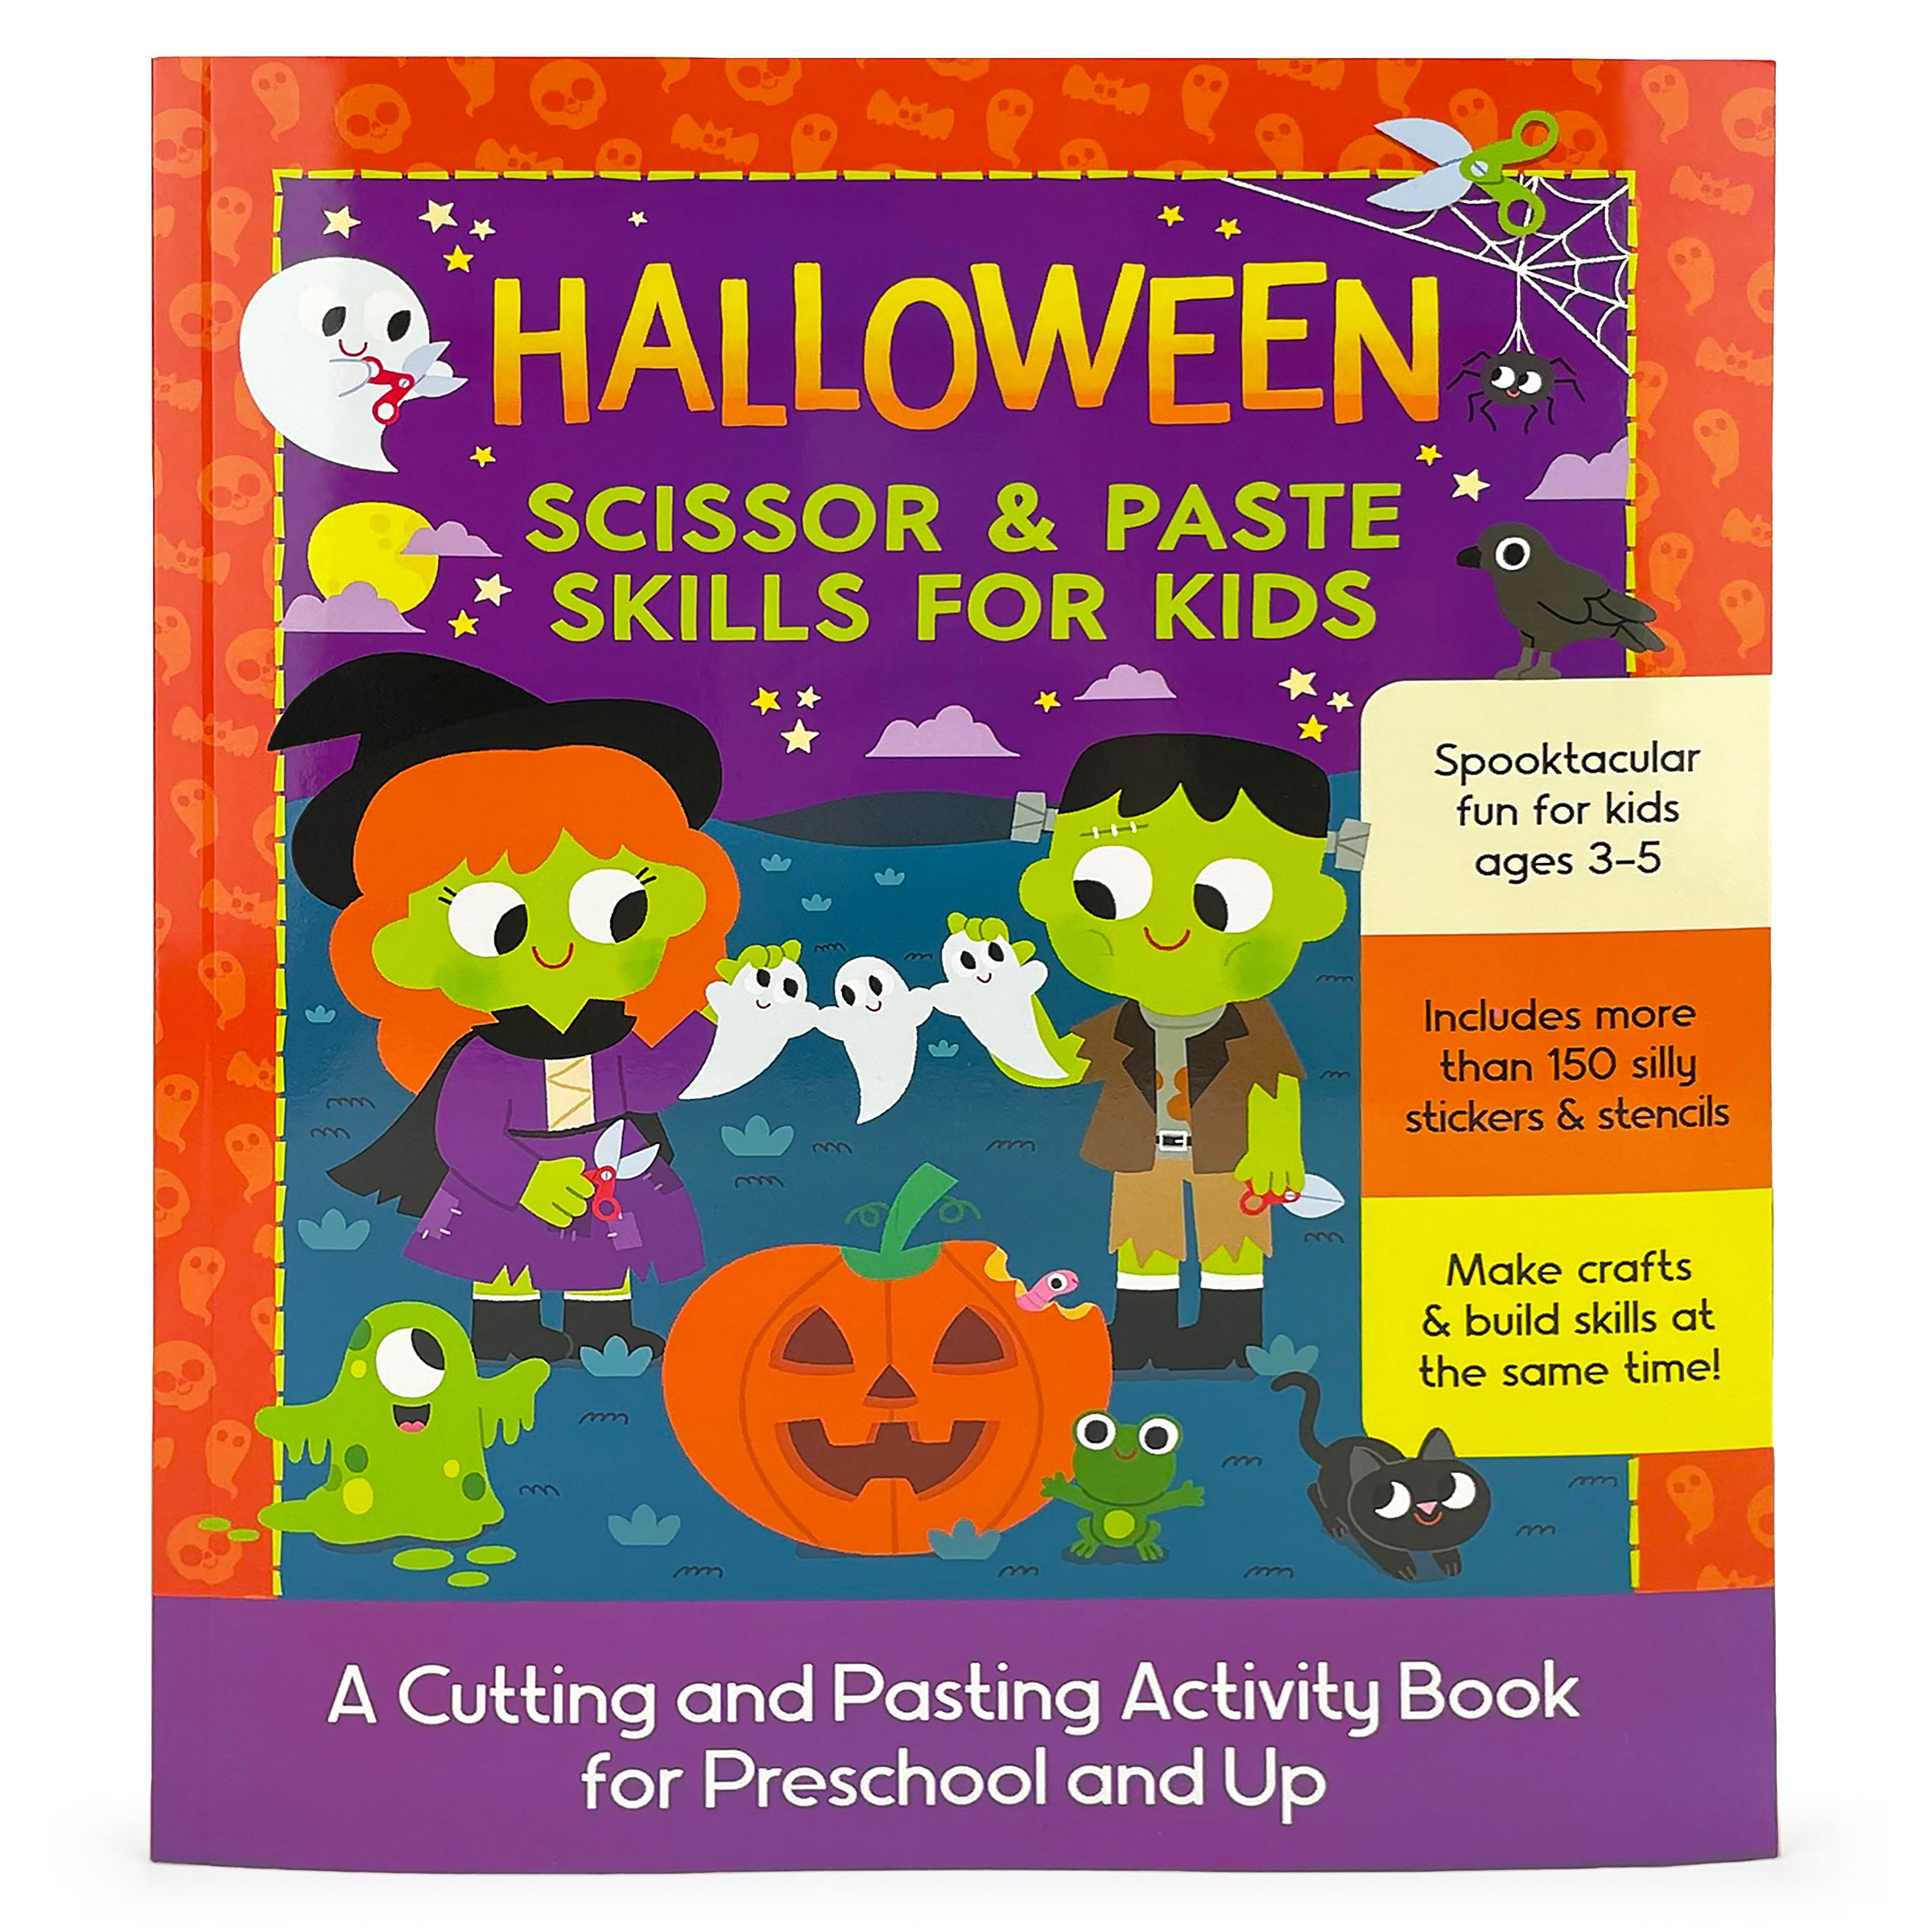 Scissor Skills Preschool Workbook for Kids: A Fun Cutting Practice